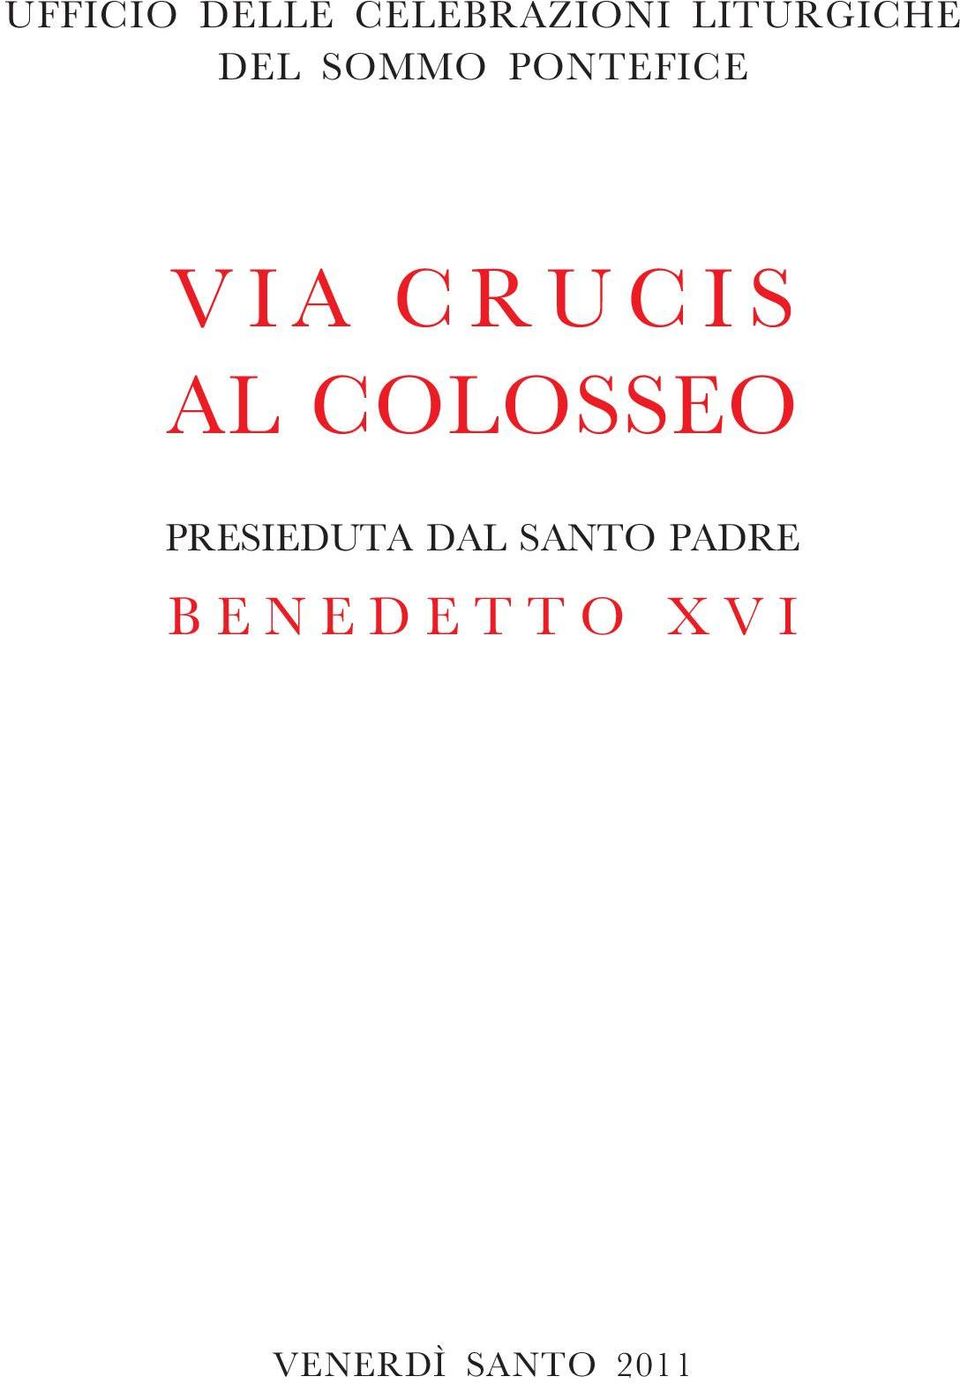 CRUCIS AL COLOSSEO PRESIEDUTA DAL